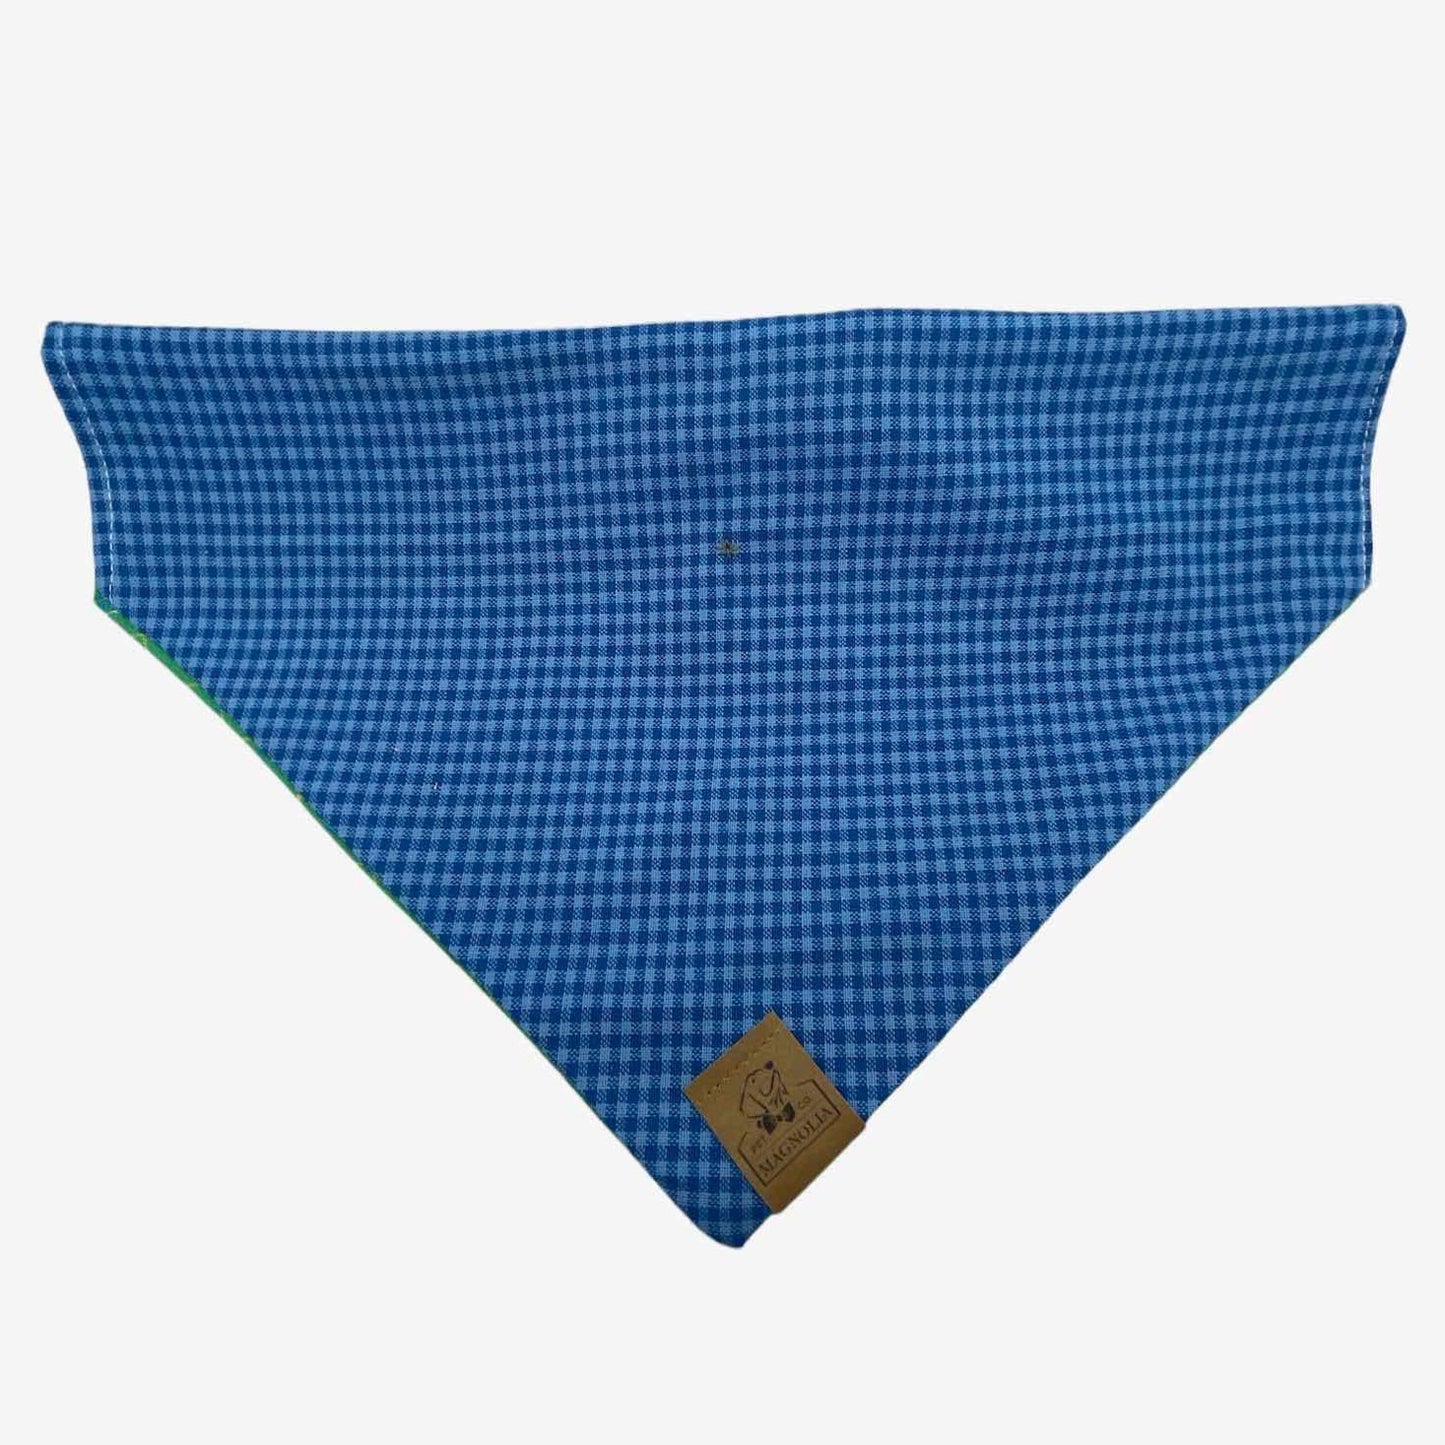 Blue on Blue gingham dog bandana with reversible blue plaid tartan print 